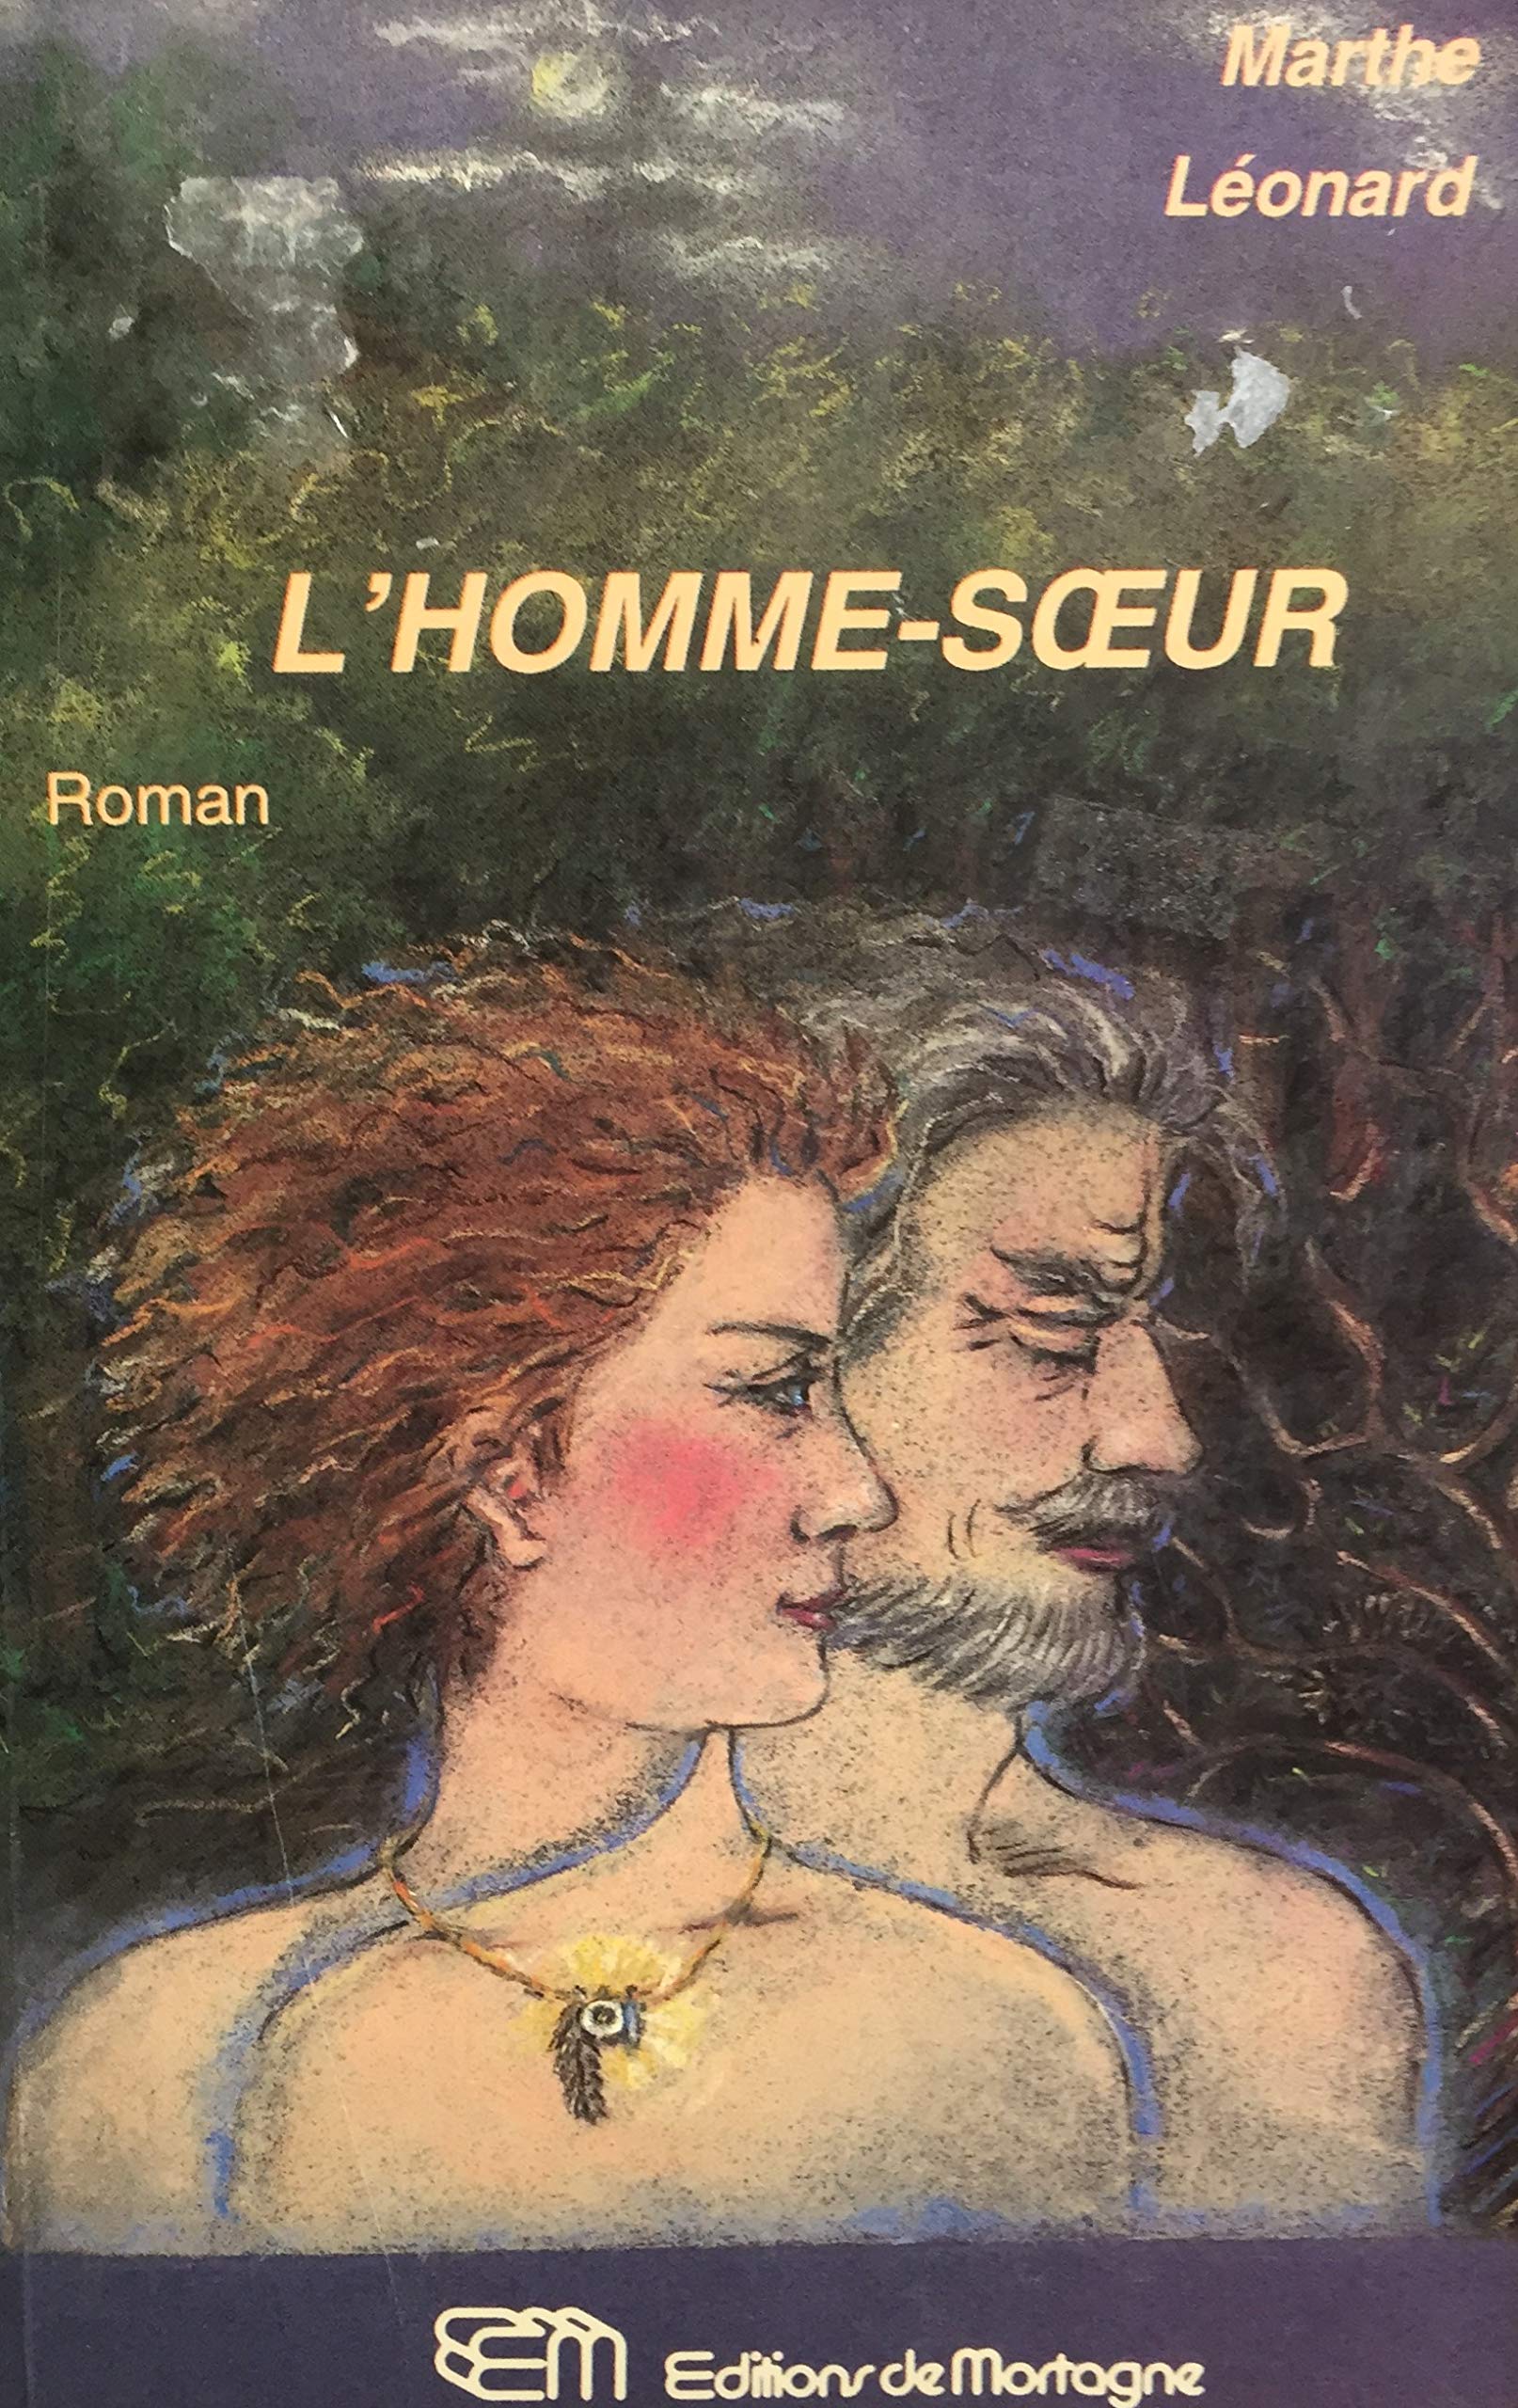 Livre ISBN 2890743470 L'homme-soeur (Marthe Léonard)